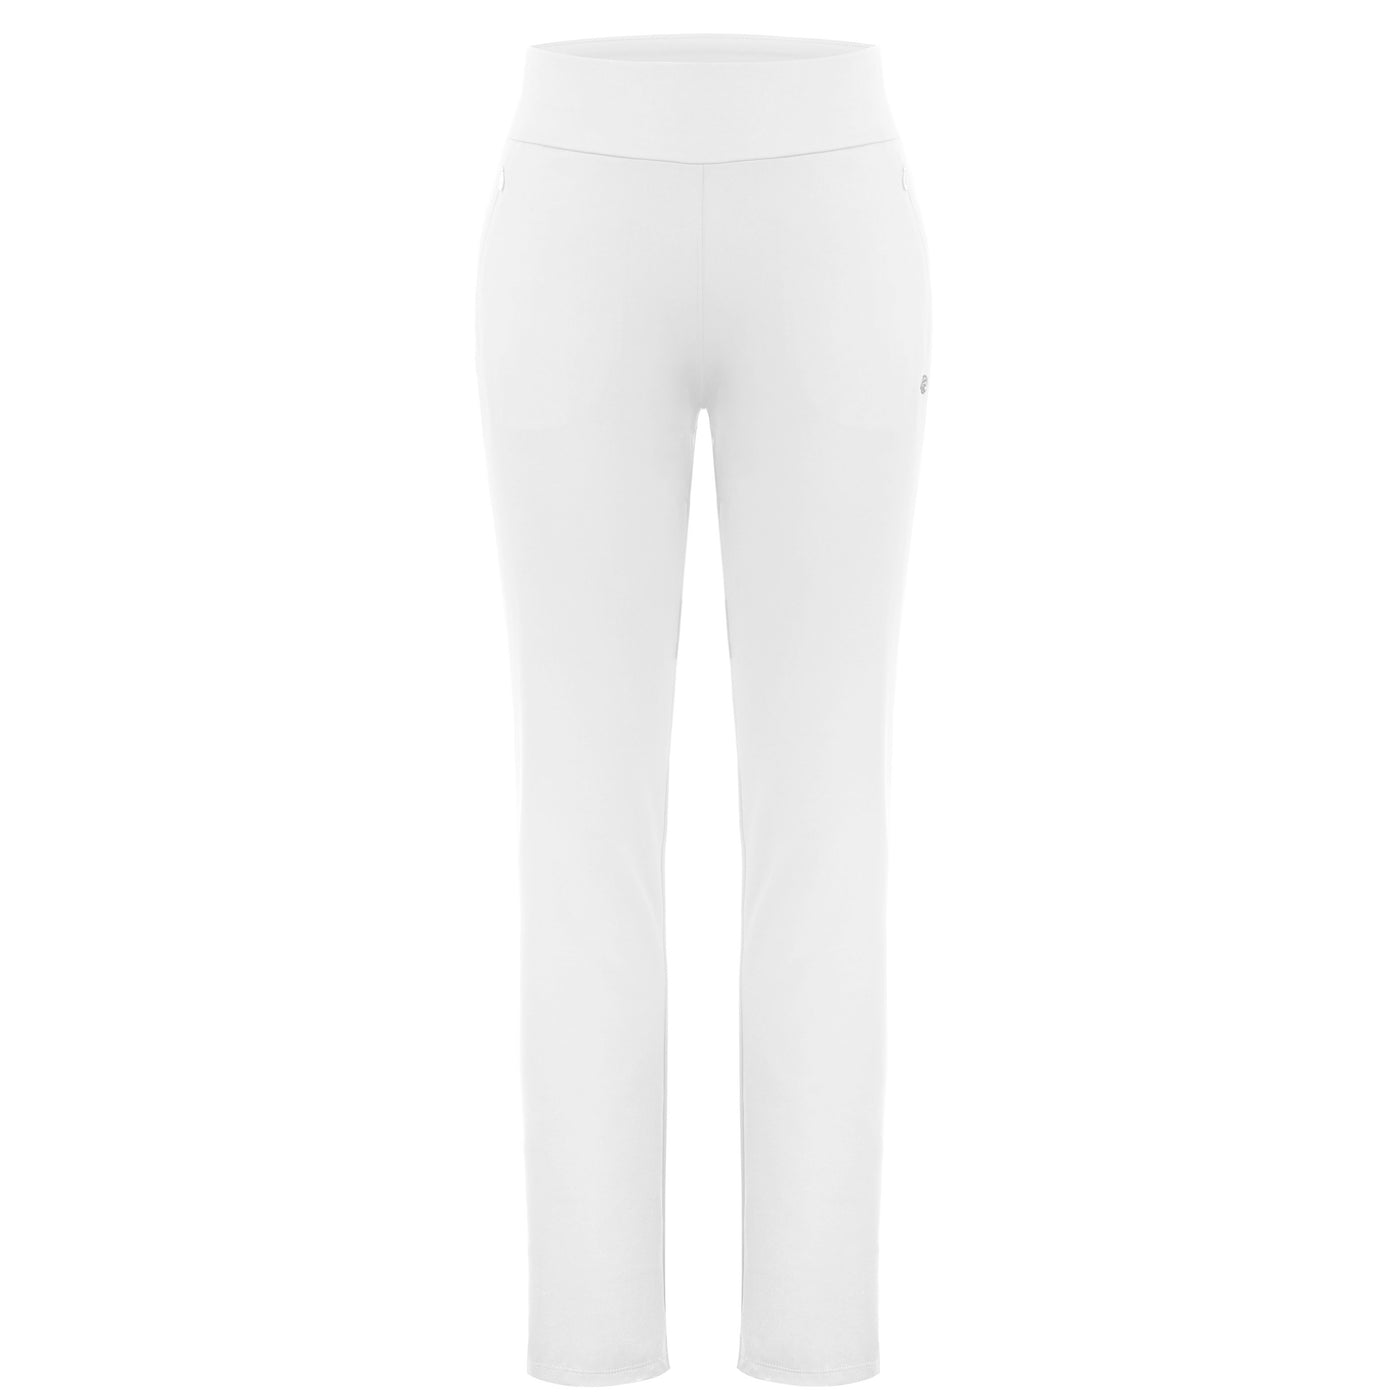 Ladies Pants (White)